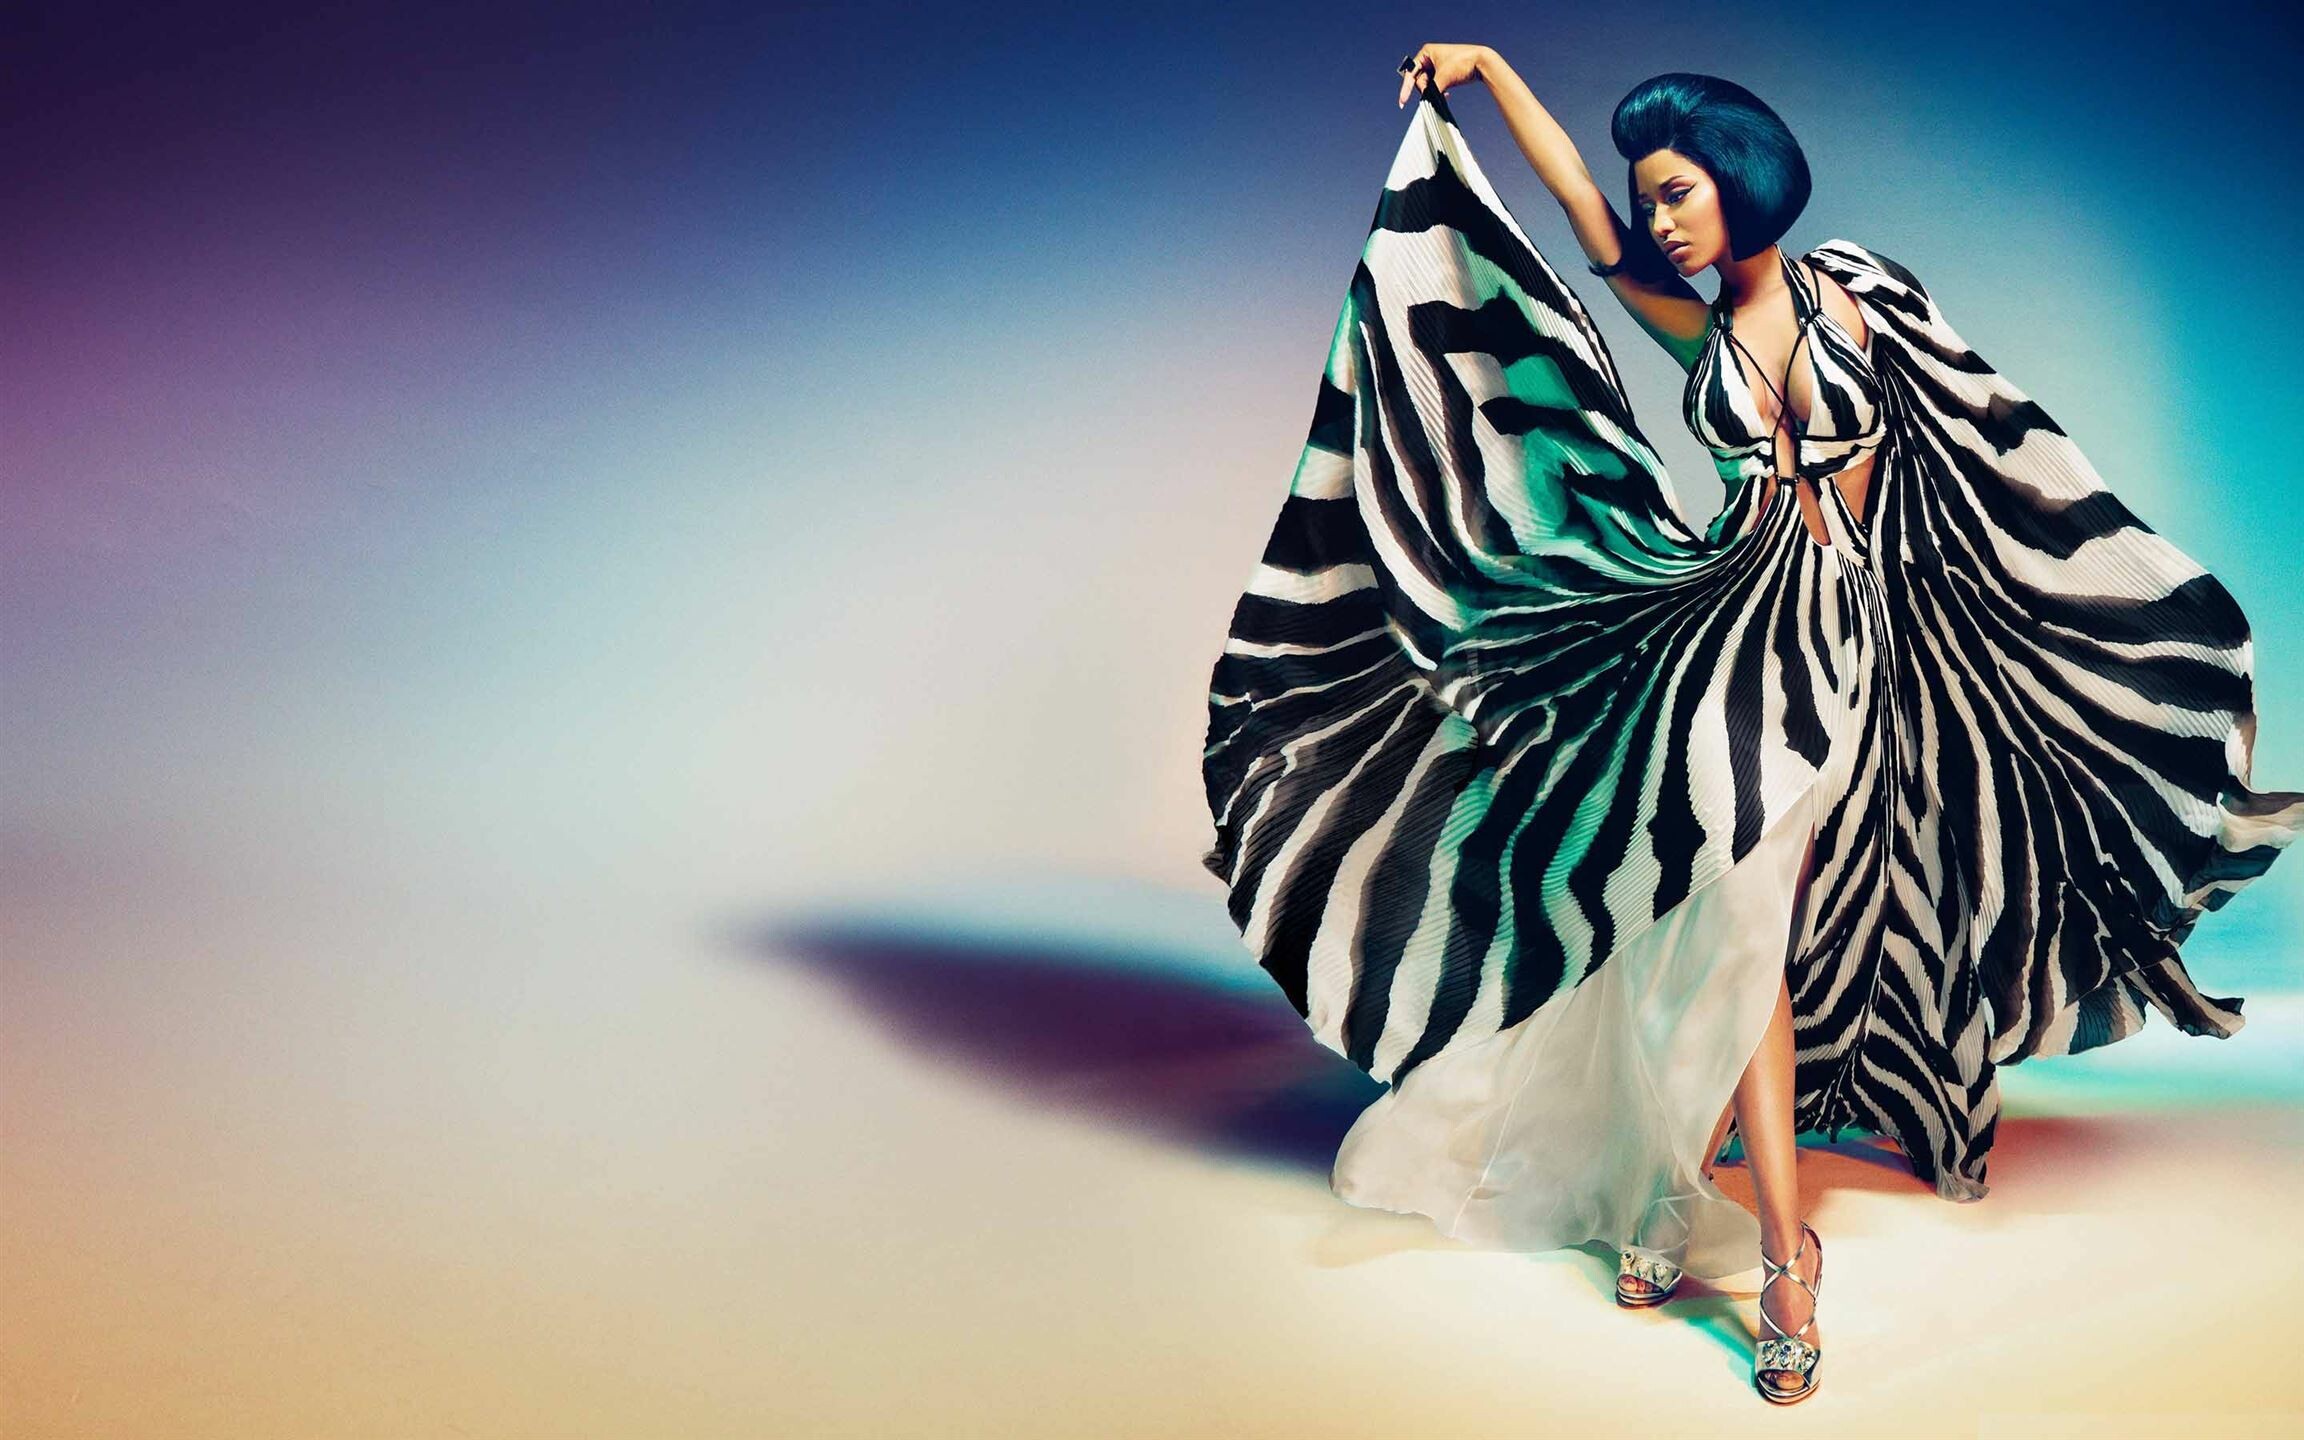 Nicki Minaj: An American rapper, singer, and songwriter, Distinctive voice. 2310x1440 HD Wallpaper.